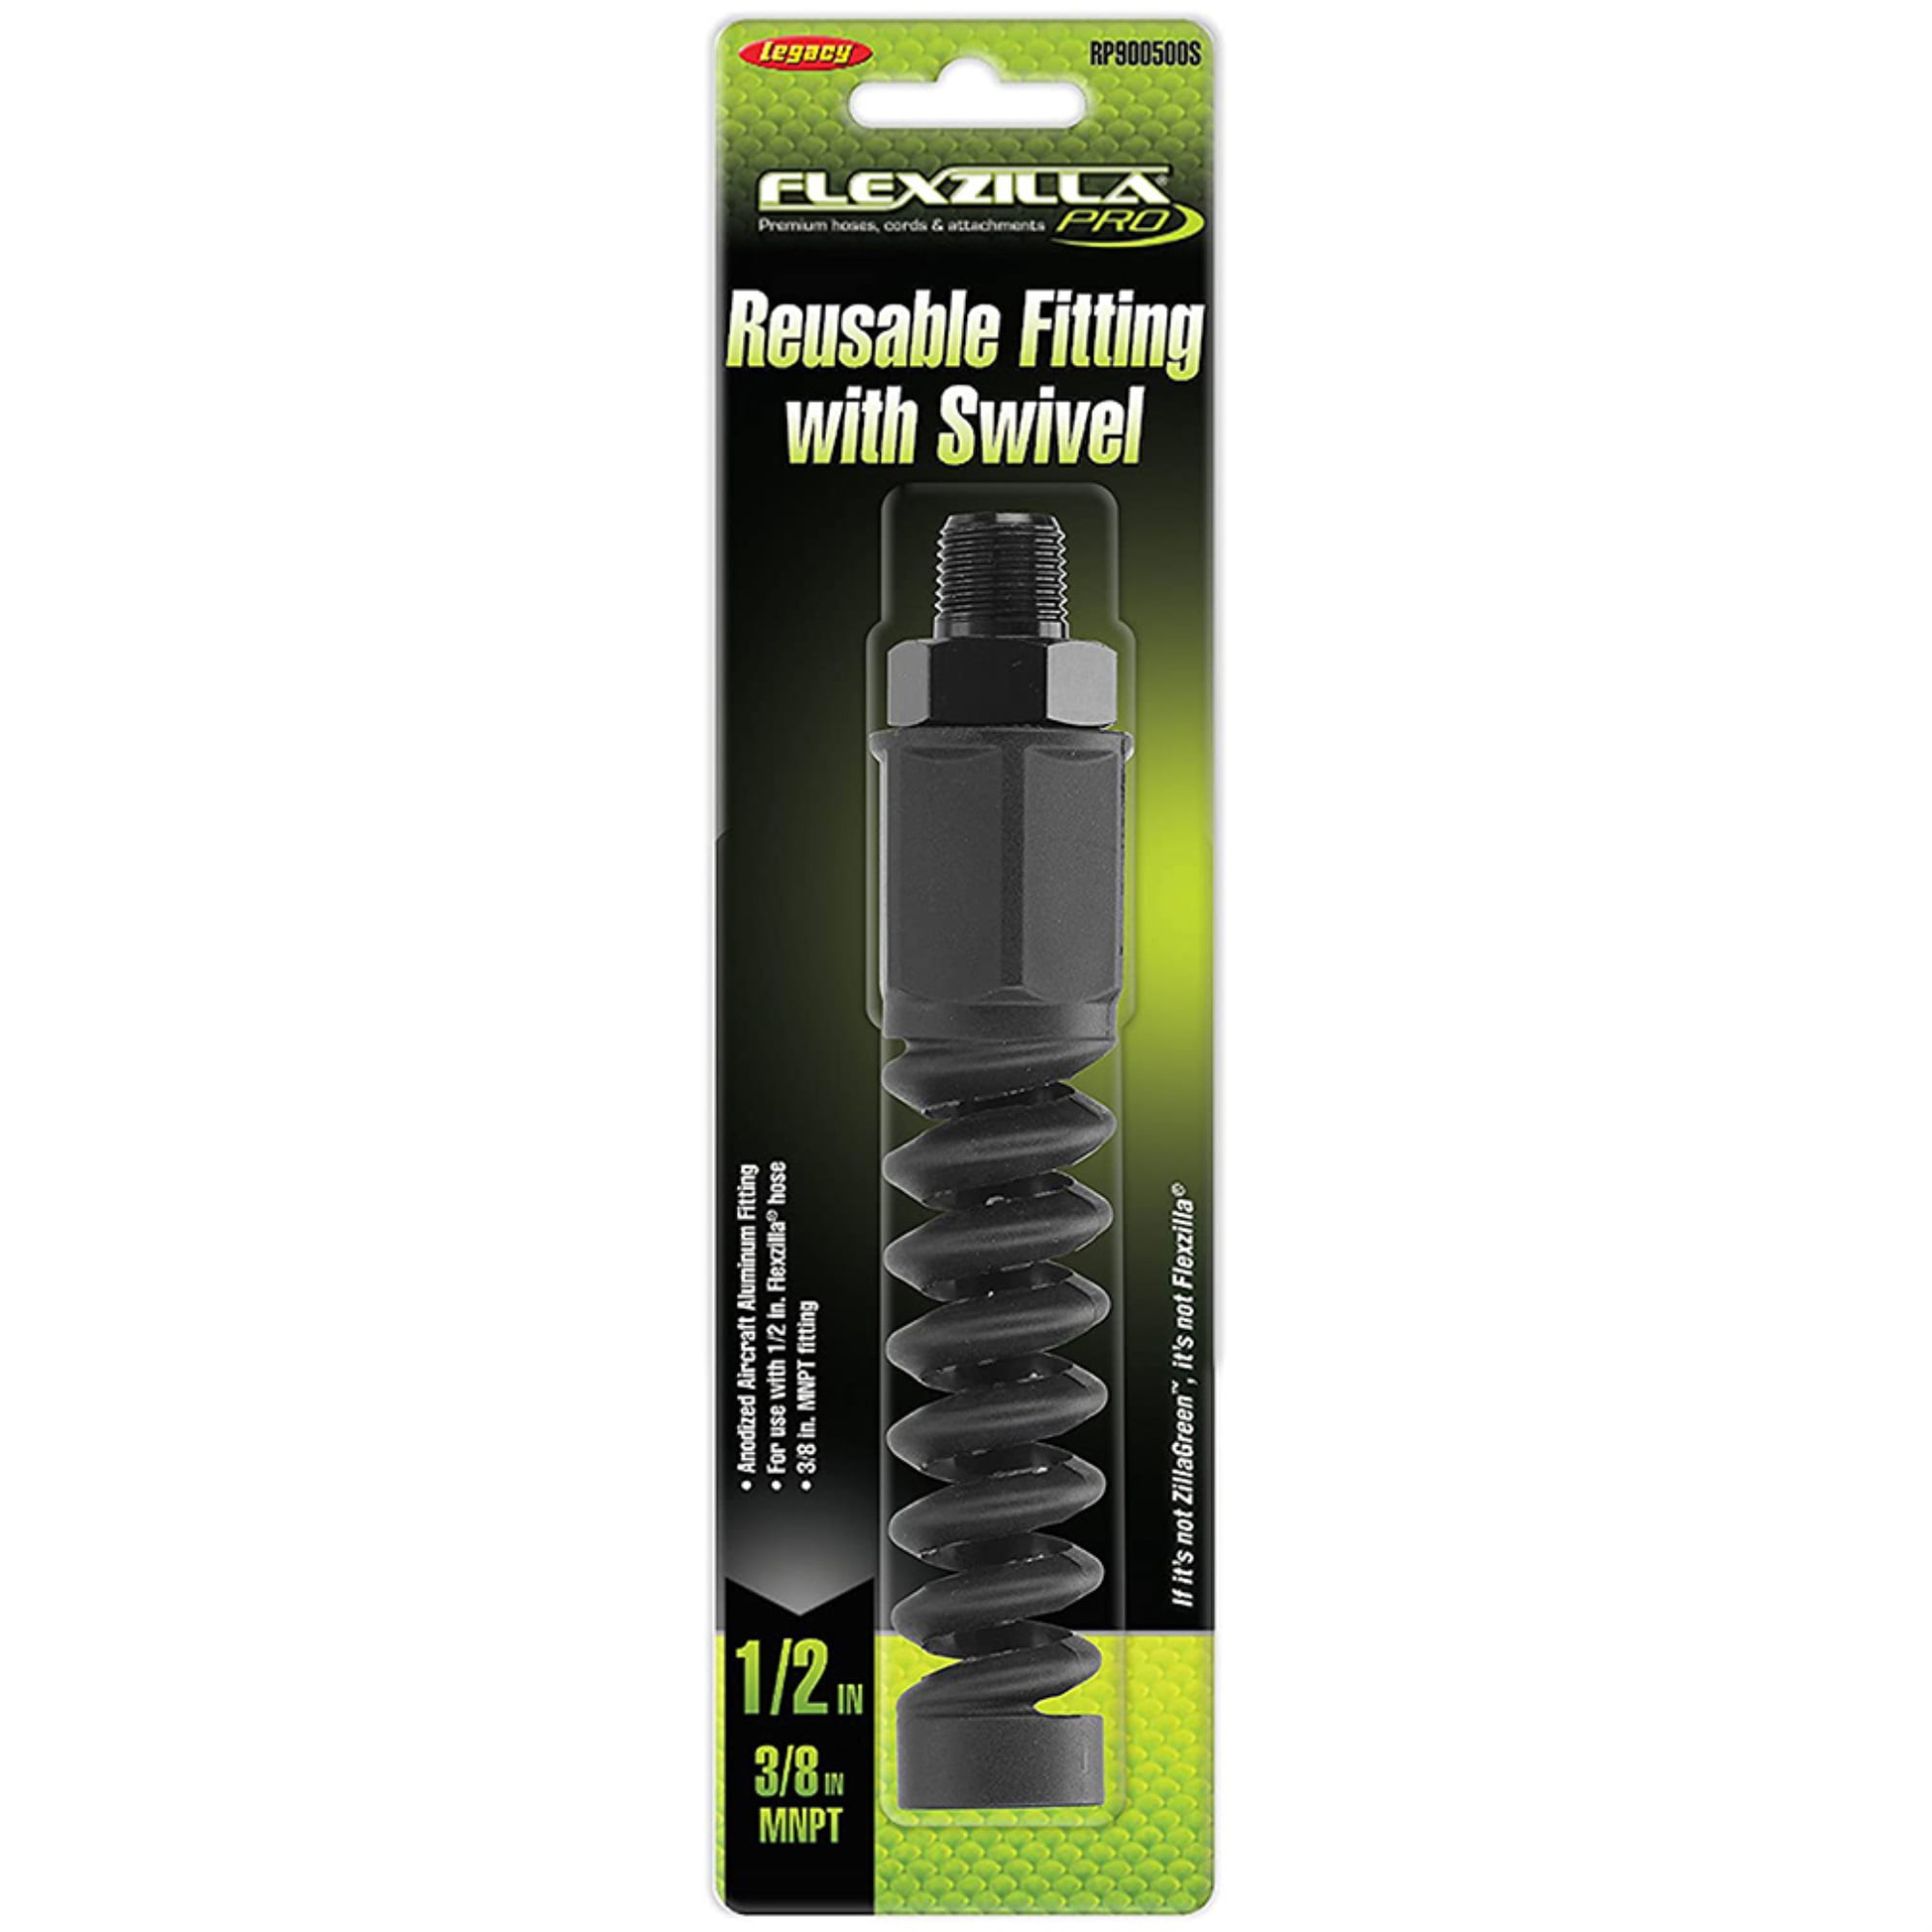 Flexilla Hose 1/2" Reusable End RP900500 Legacy Manufacturing Co for sale online 